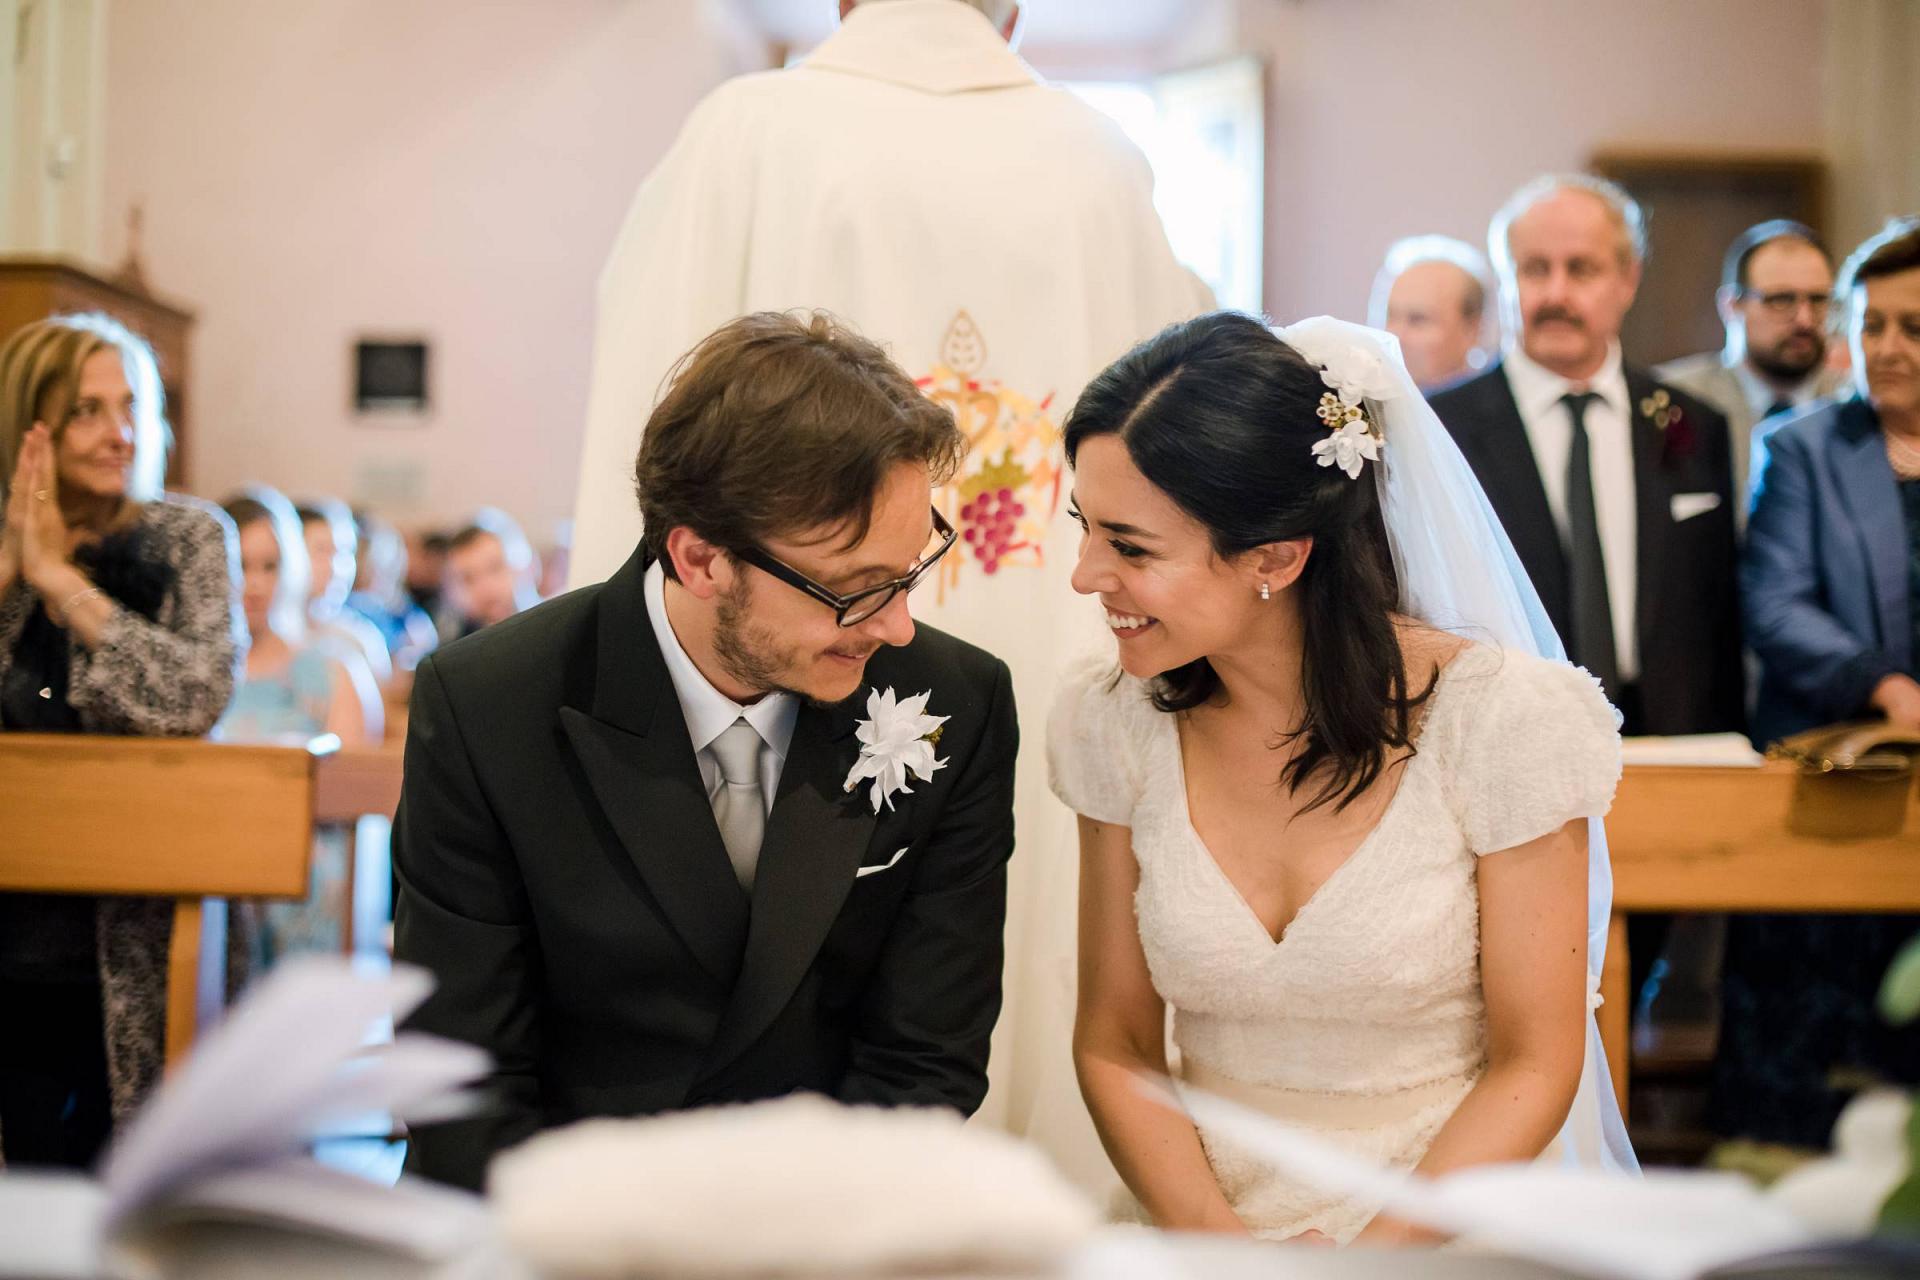 Roberta&Luca Matrimonio Wedding Borgo Fregnano bride italia italy hills colline MCE Stories Destination Photographer